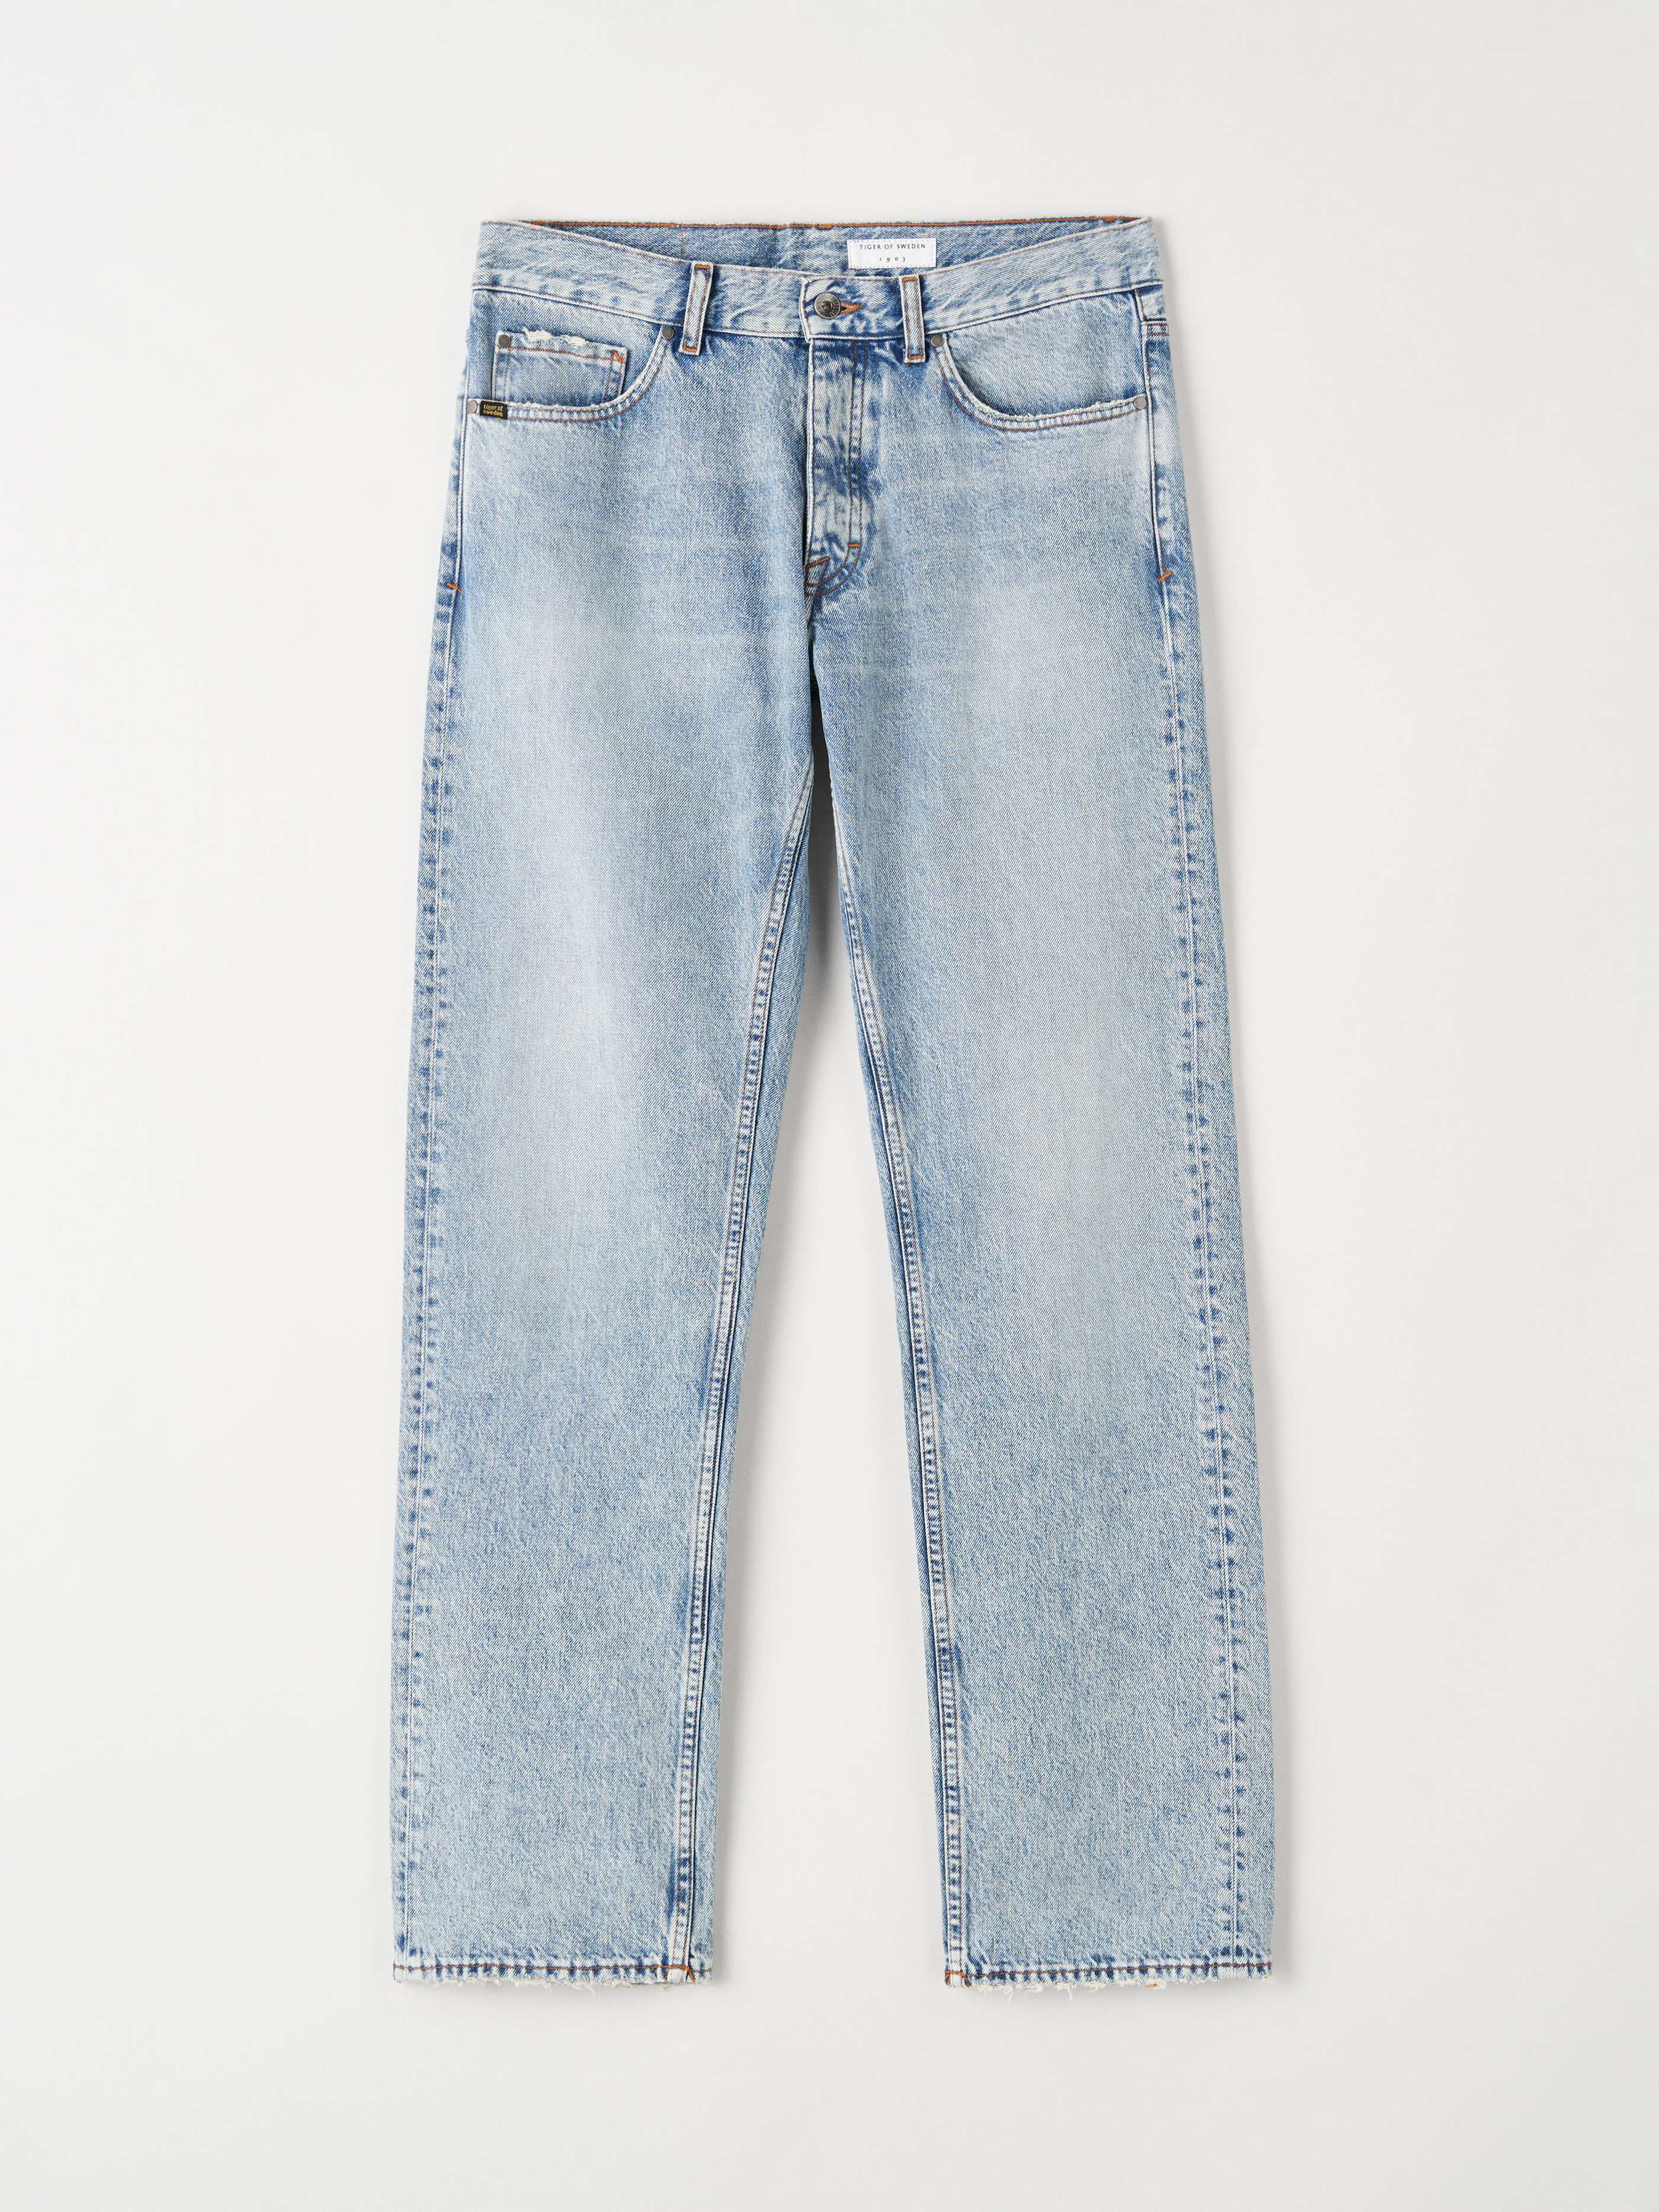 Marty jeans - Buy Men online